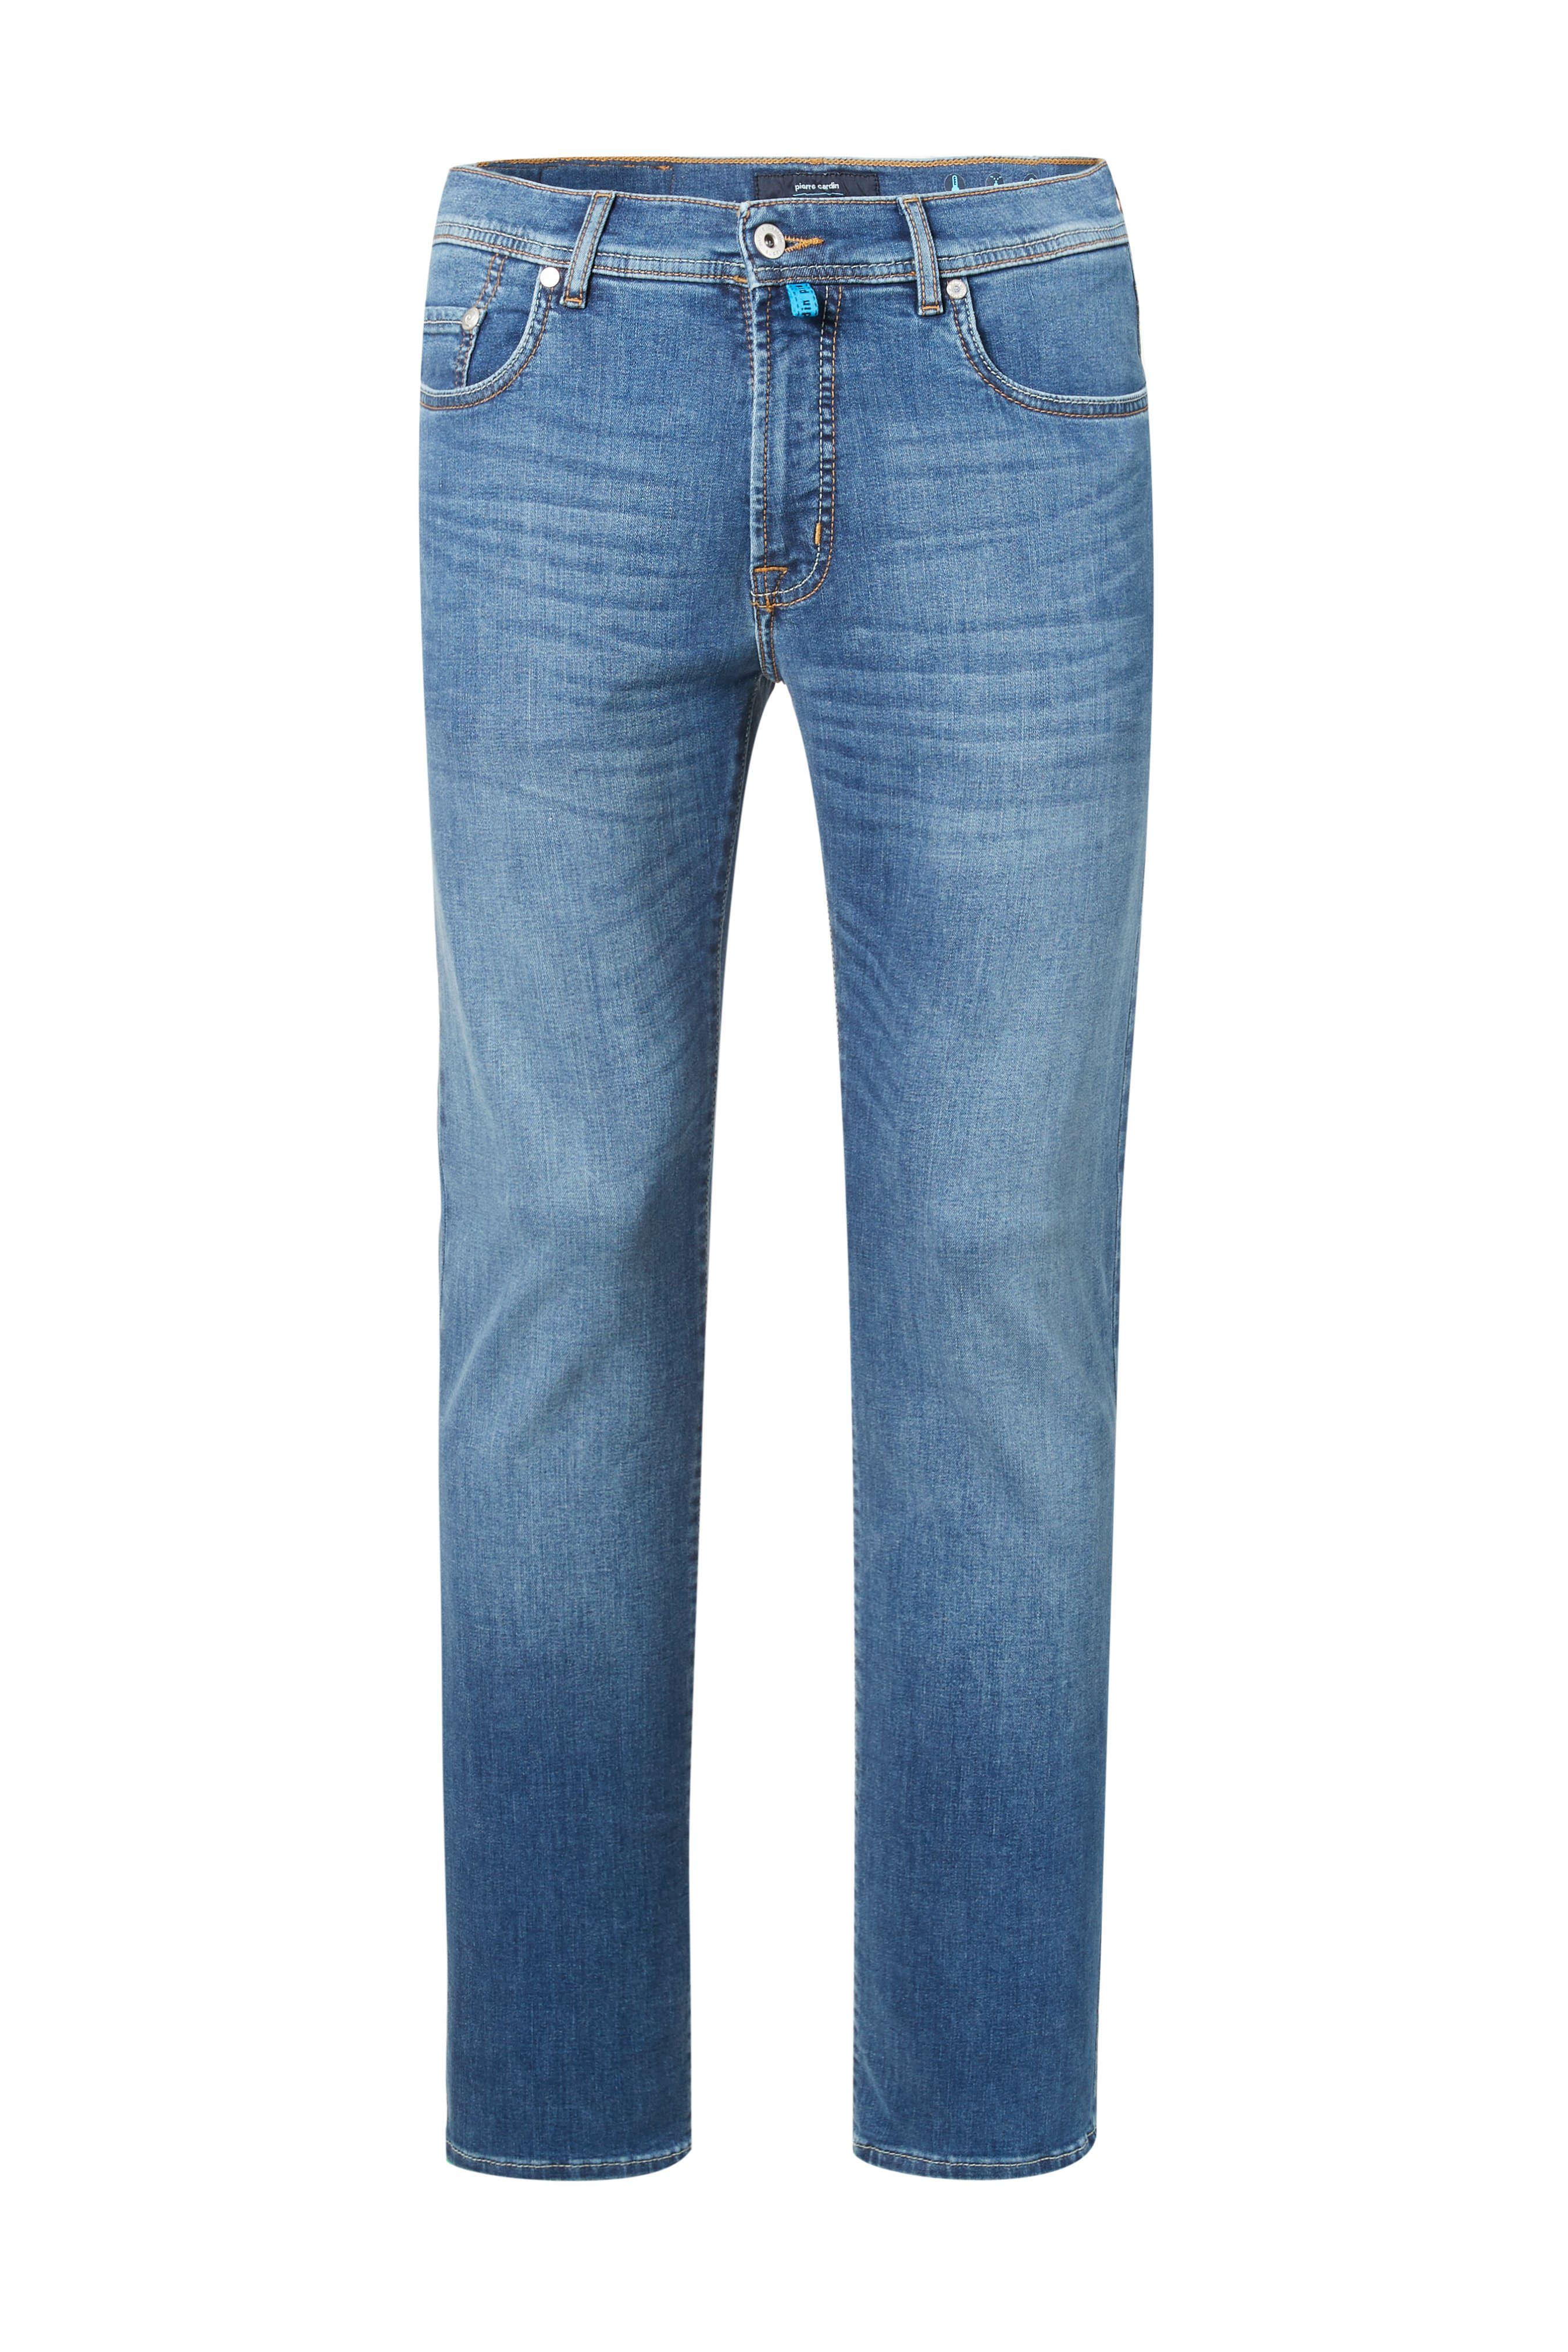 Pierre Cardin 5-Pocket-Jeans PIERRE CARDIN LYON washed out retro blue 30915 7719.03 - CLIMA CONTROL | Jeans